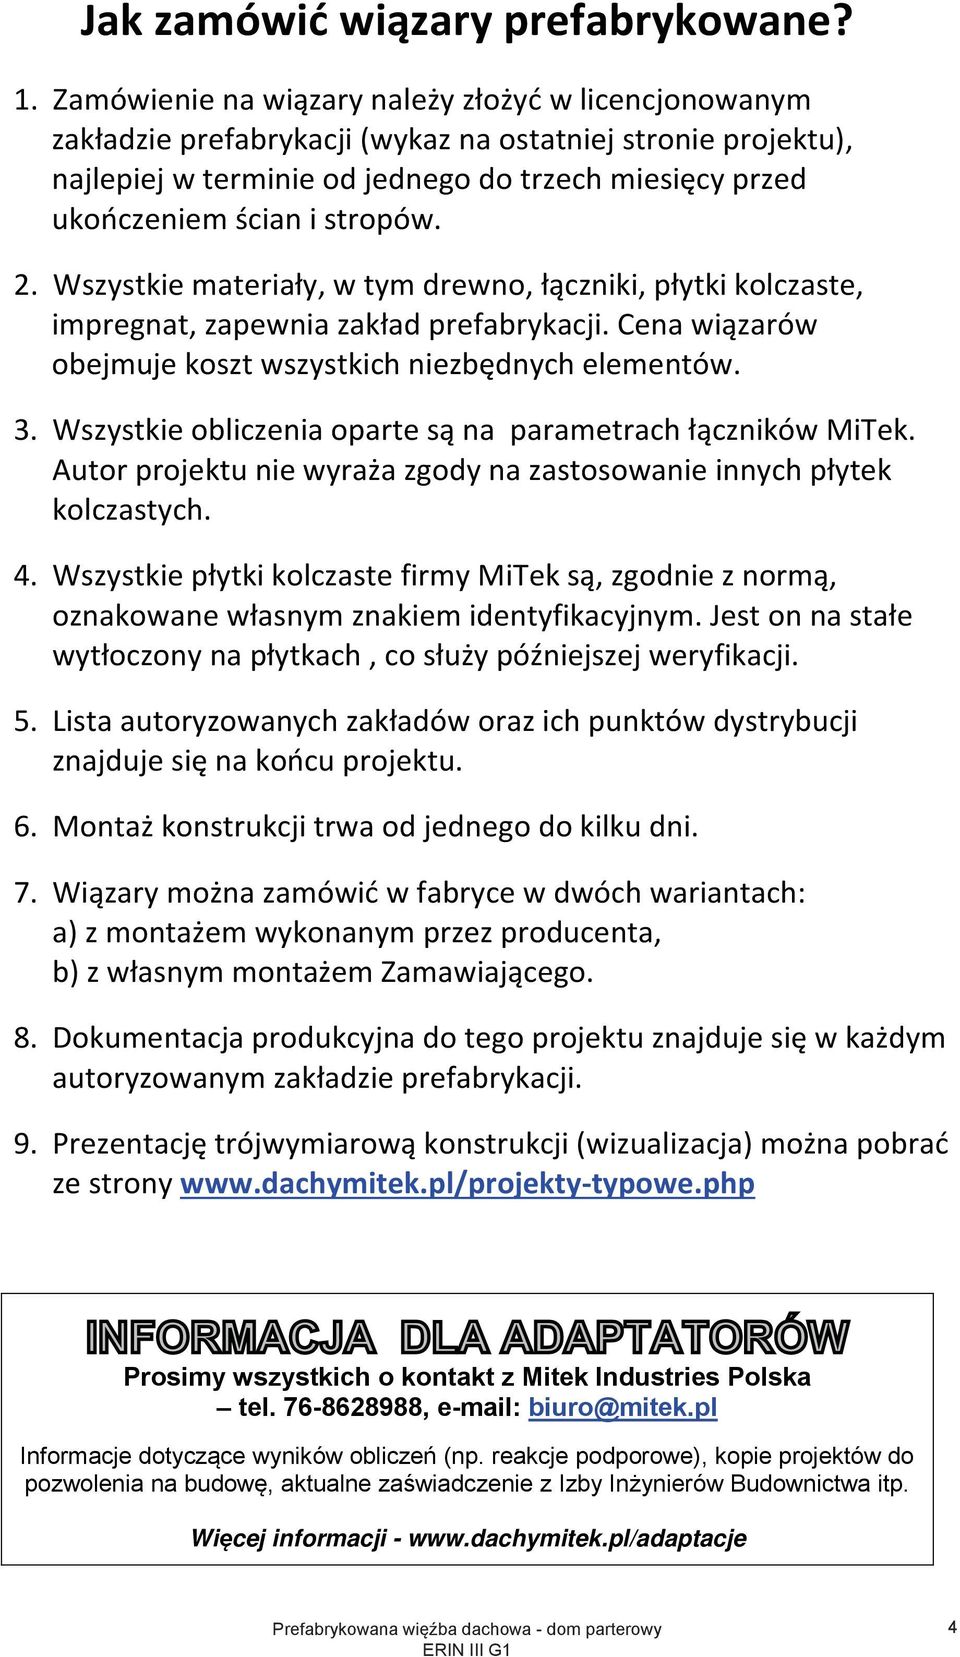 tel. 76-8628988, e-mail: biuro@mitek.pl I czeni itp.